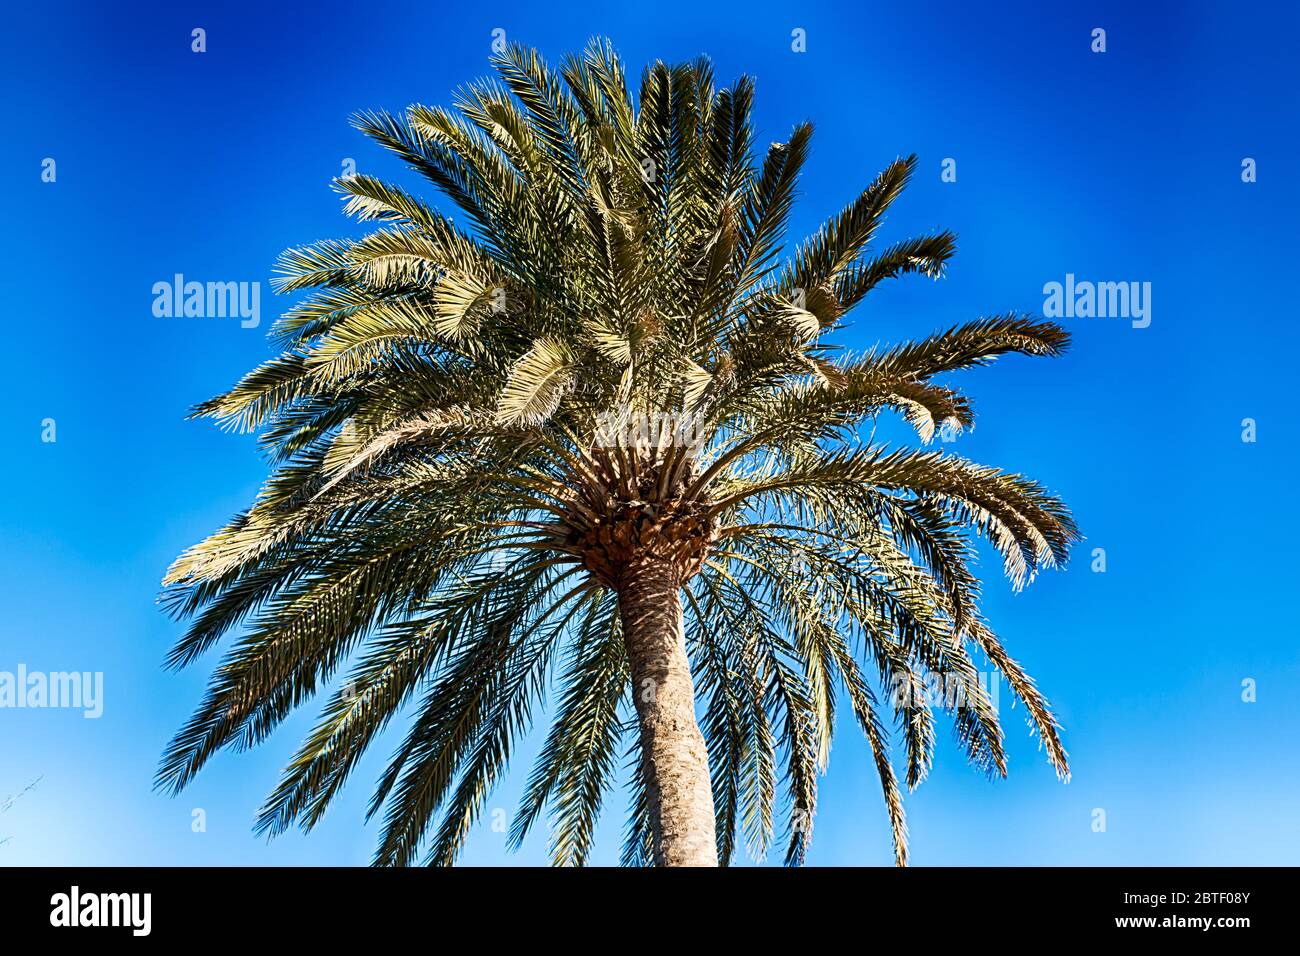 A beautiful palm tree in Playa del Ingles, Maspalomas, Gran Canaria, Spain. HDR. Stock Photo